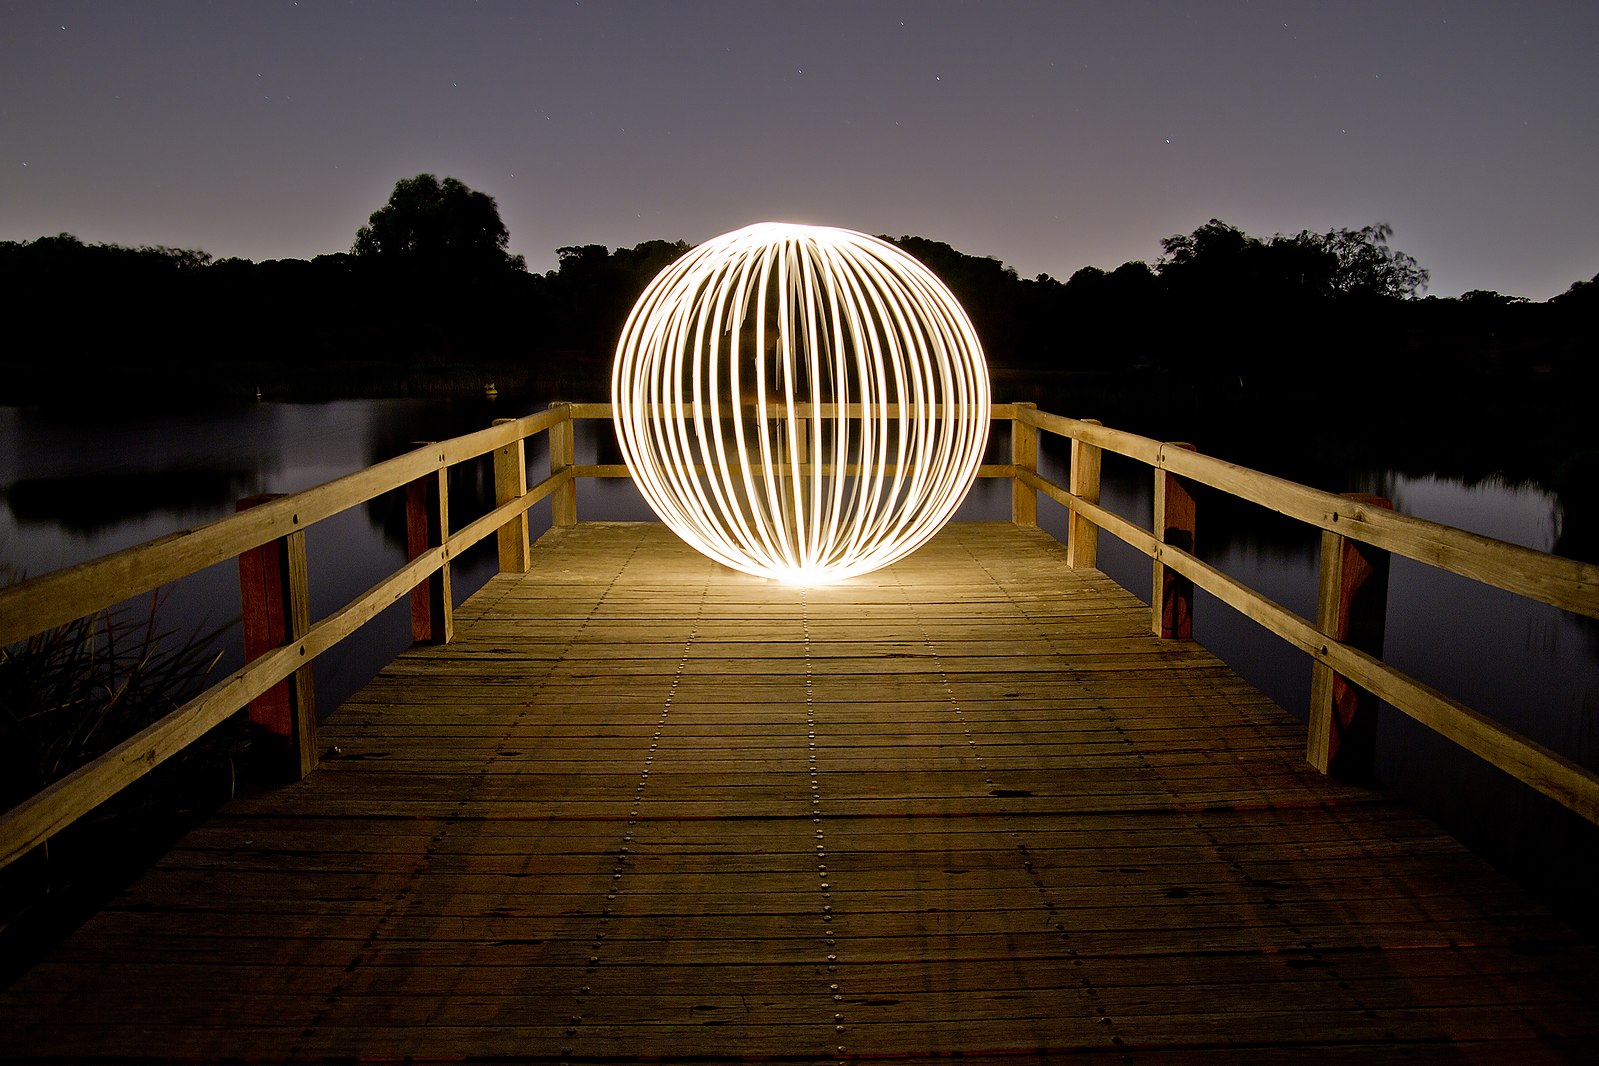 JJ Harrison. Light painting an orb in Booyeembara Park, Perth, Western Australia, Australia.